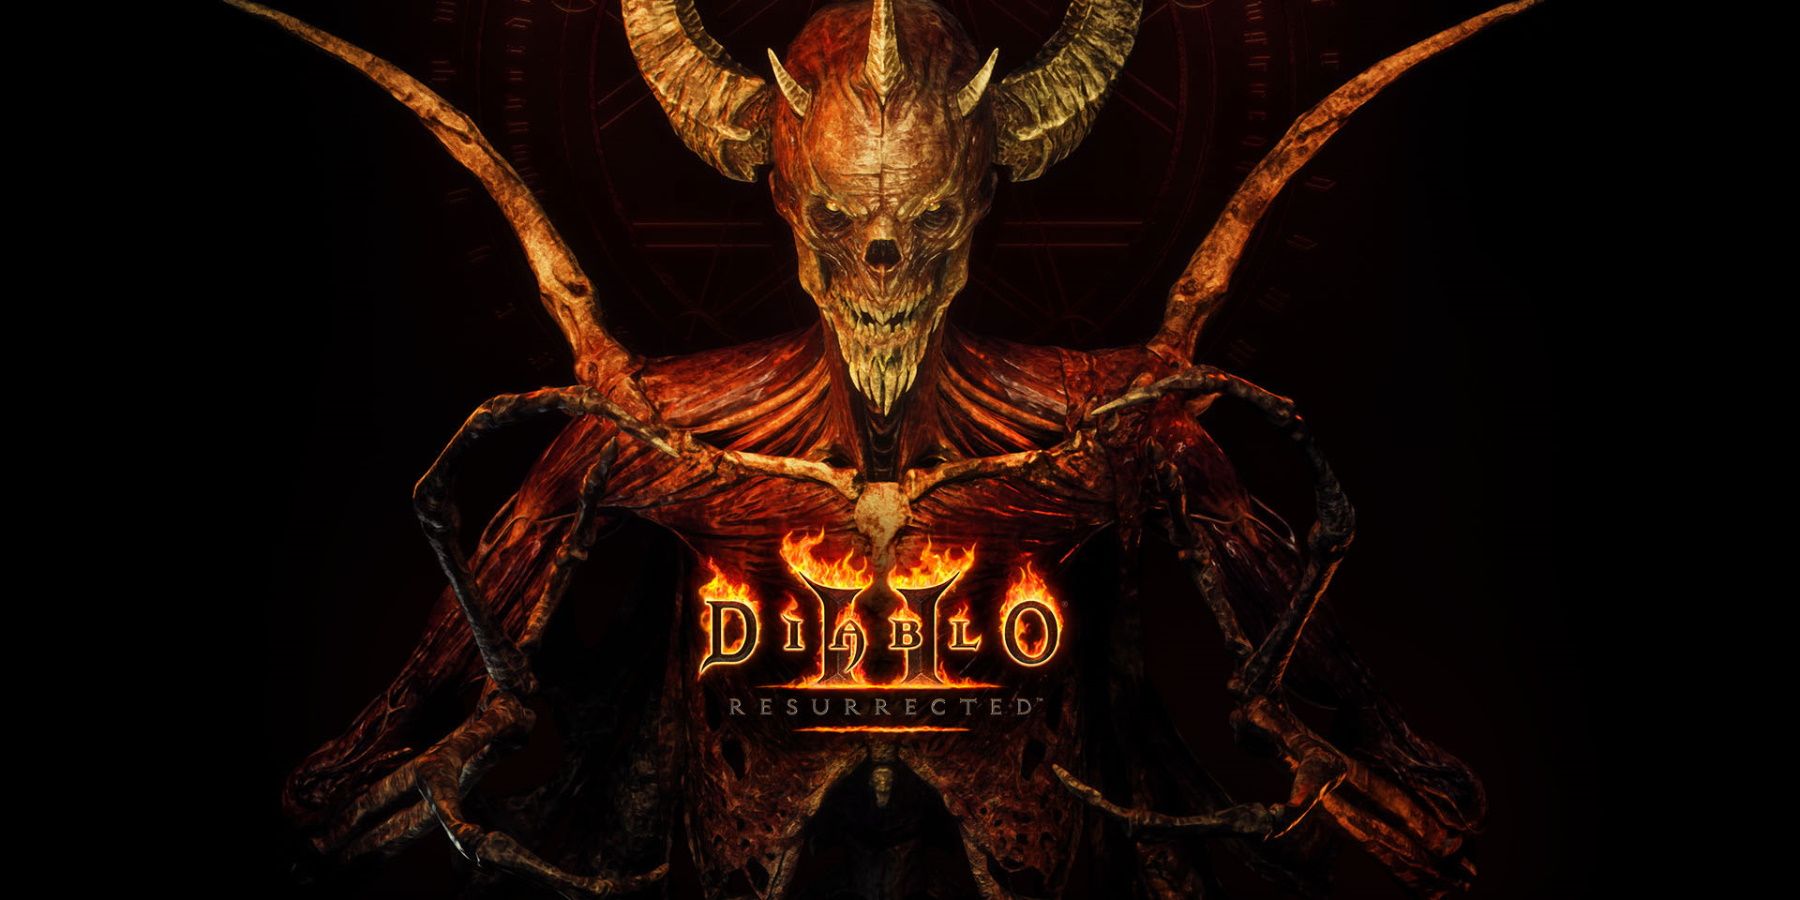 Diablo 2 Resurrected mephisto promotional art